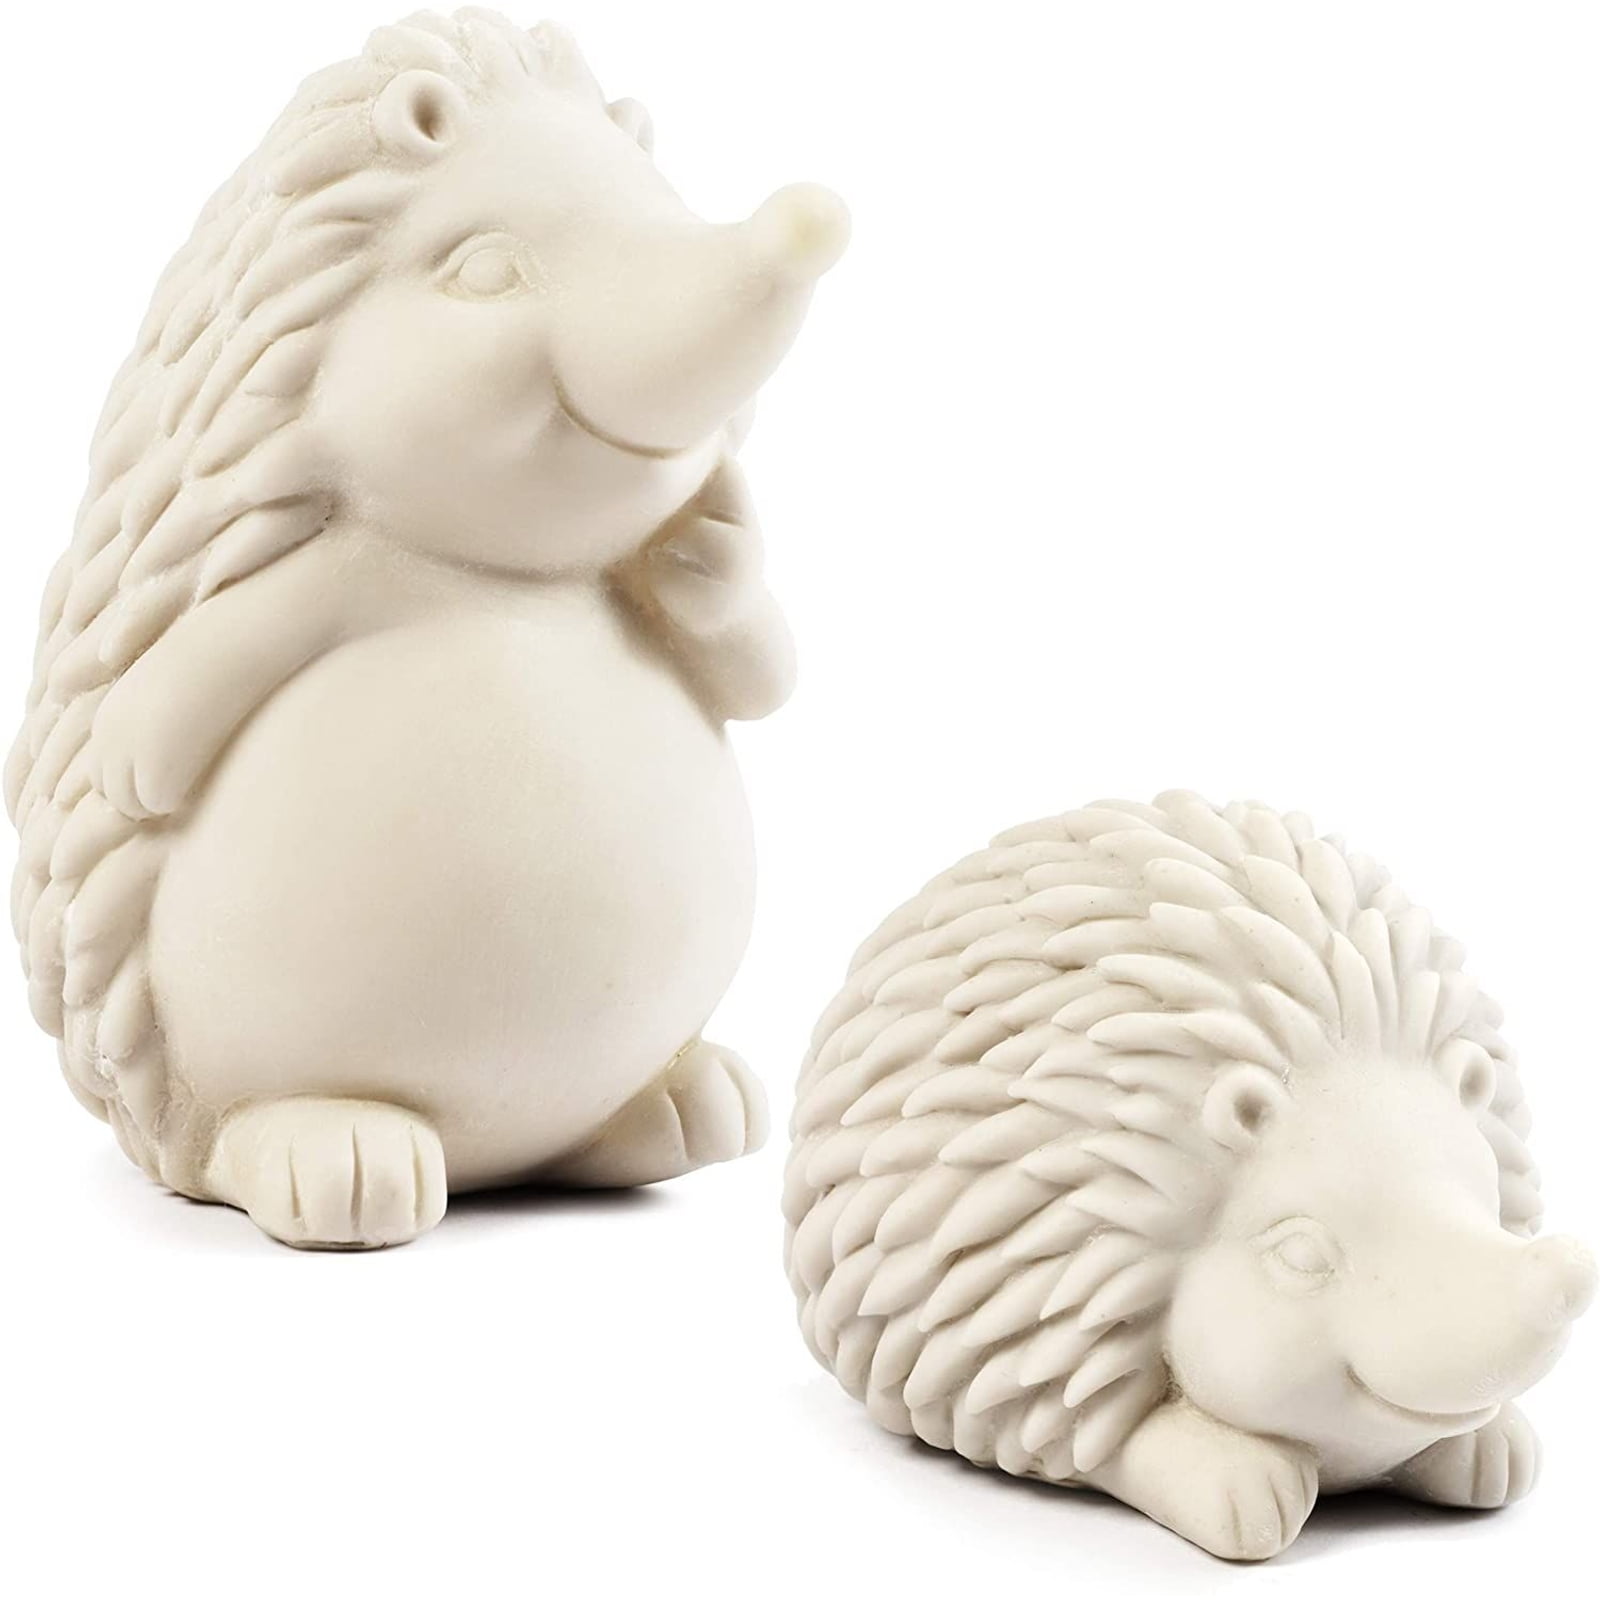 Size L ceramic hedgehog dollhouse figurines porcelain animal vintage miniature 